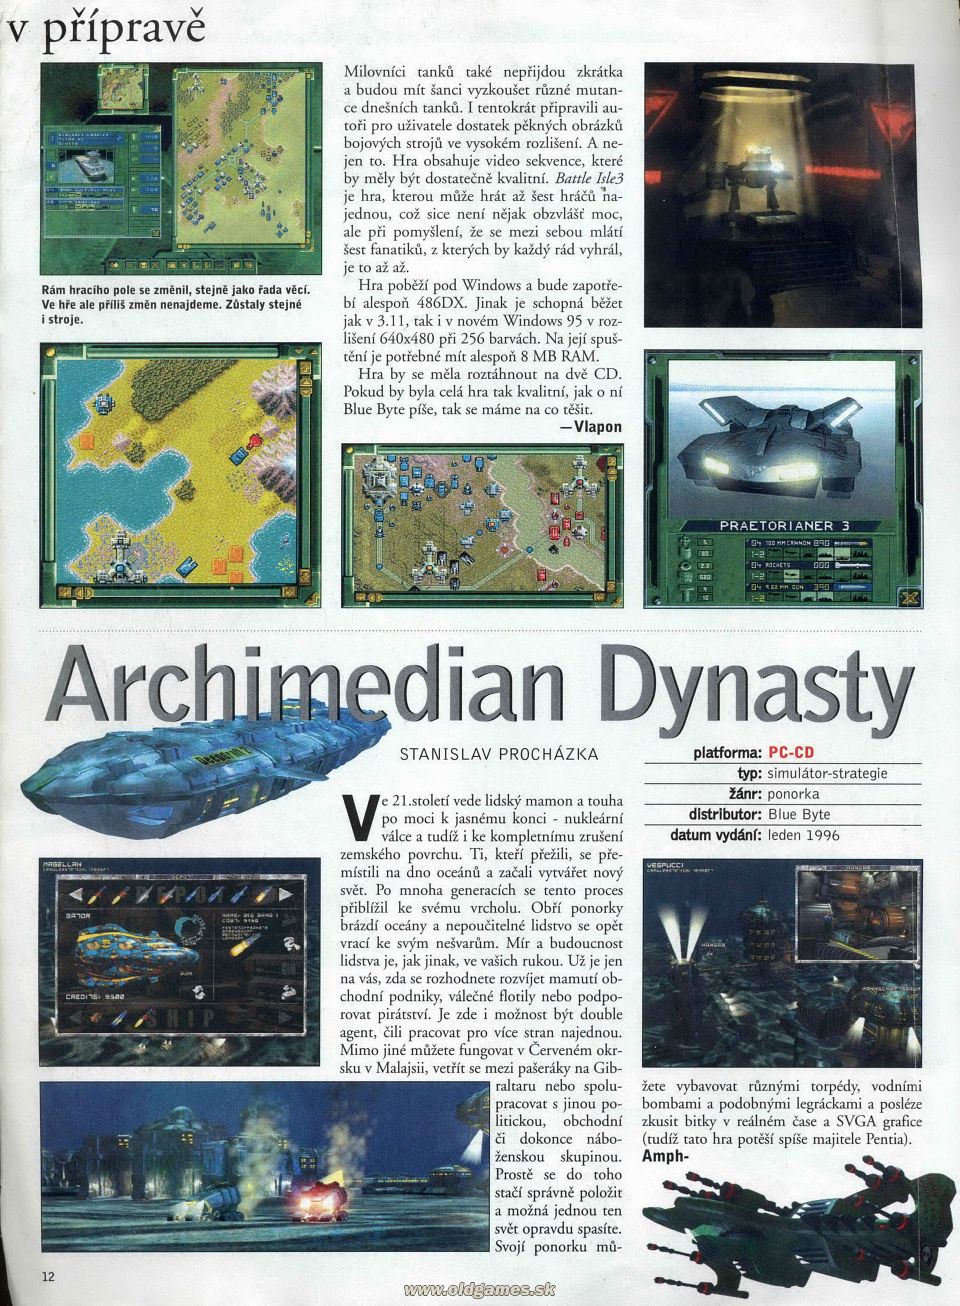 Preview: Archimedian Dynasty